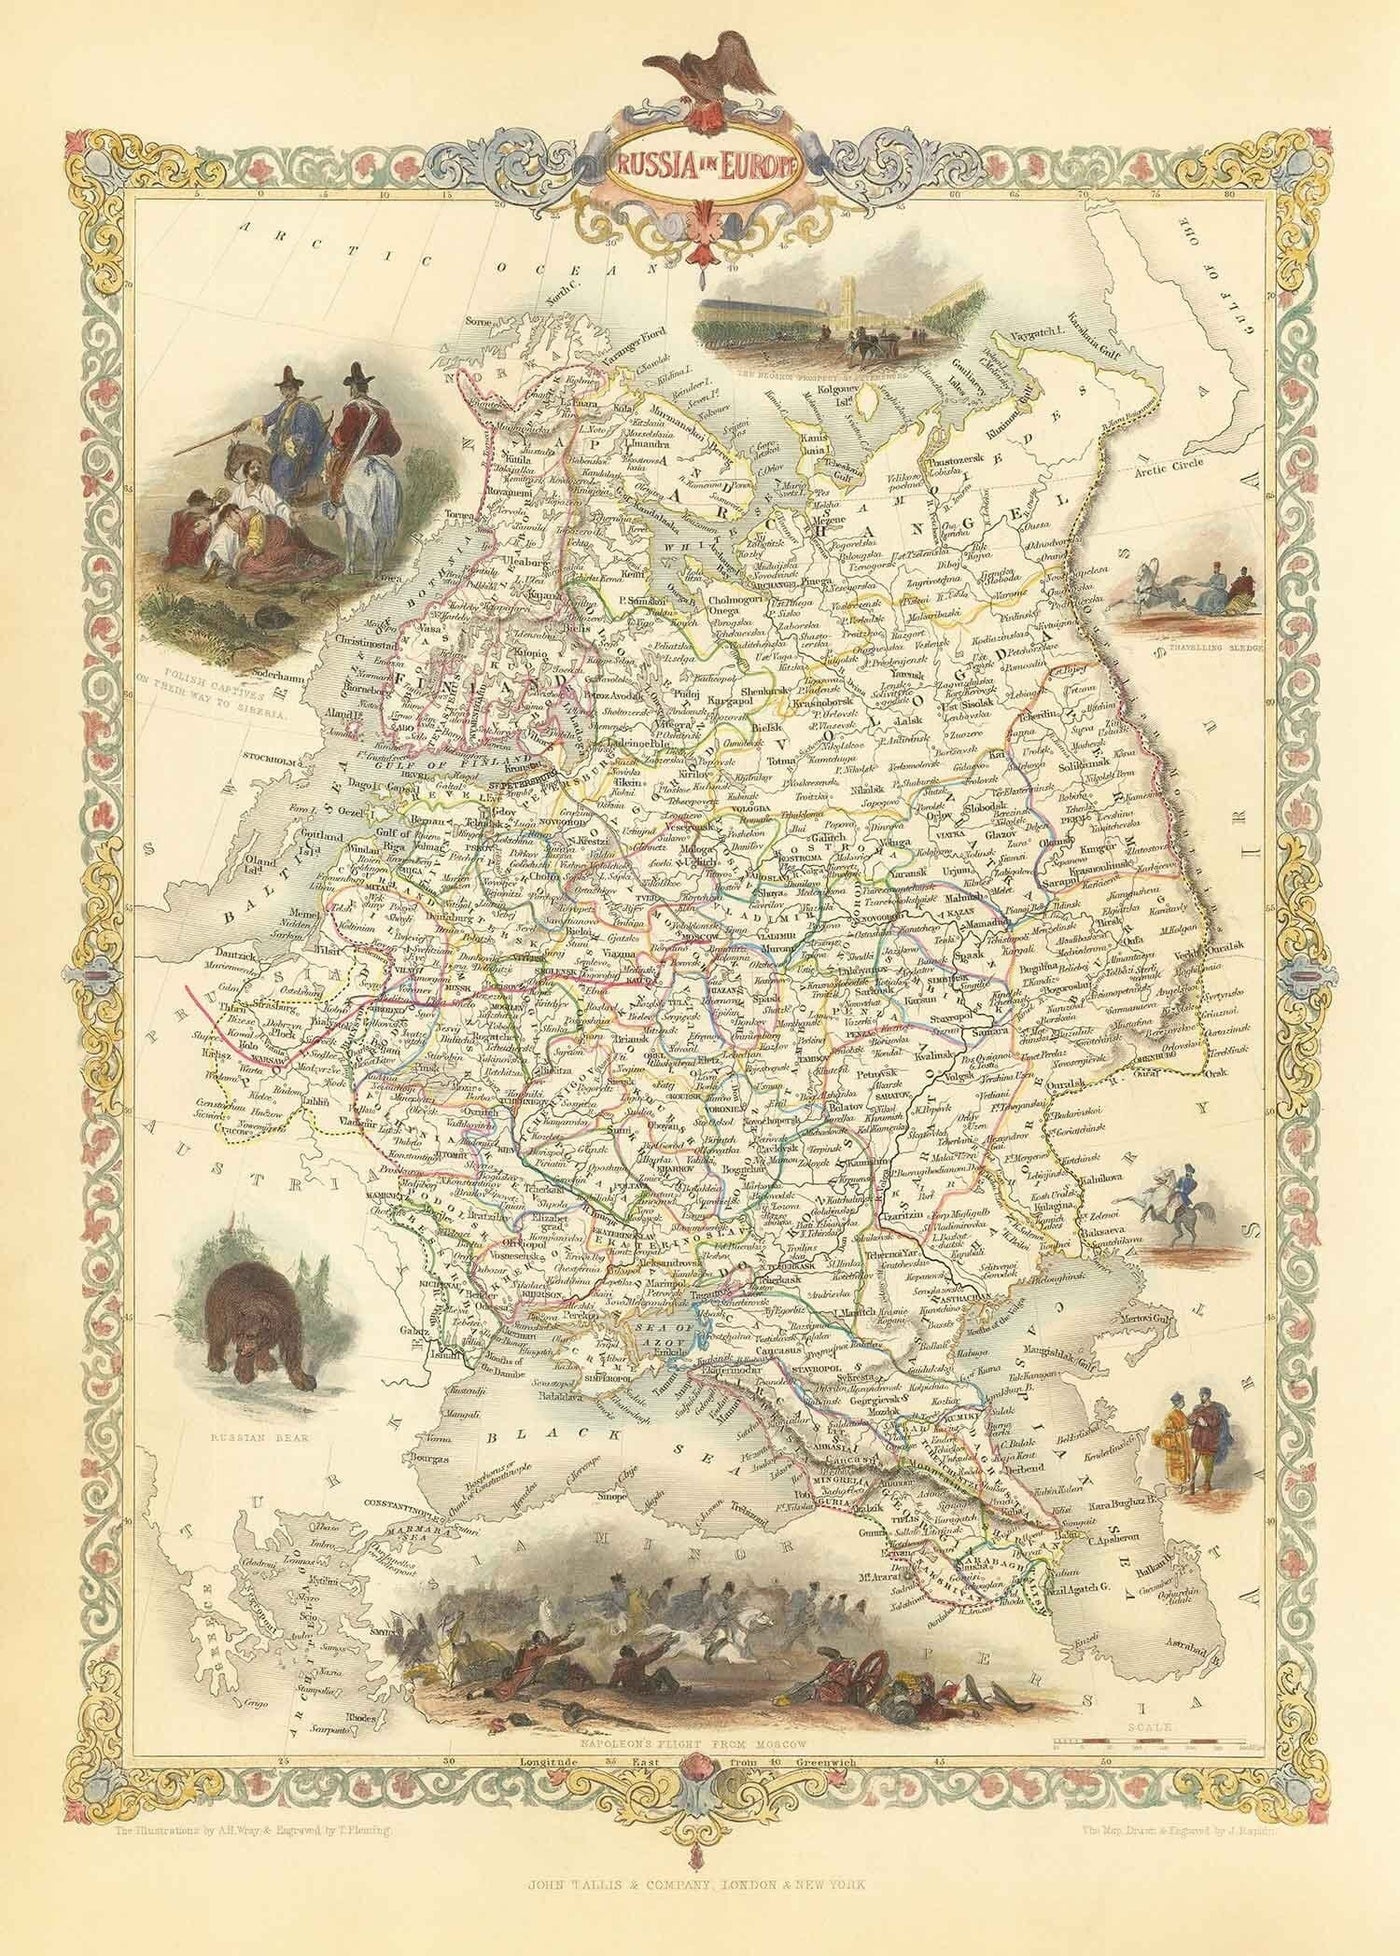 Old Map of the Russian Empire in Europe, 1851 - Moscou, Napoléon, Finlande, Crimée, Ukraine, Minsk, Saint-Pétersbourg